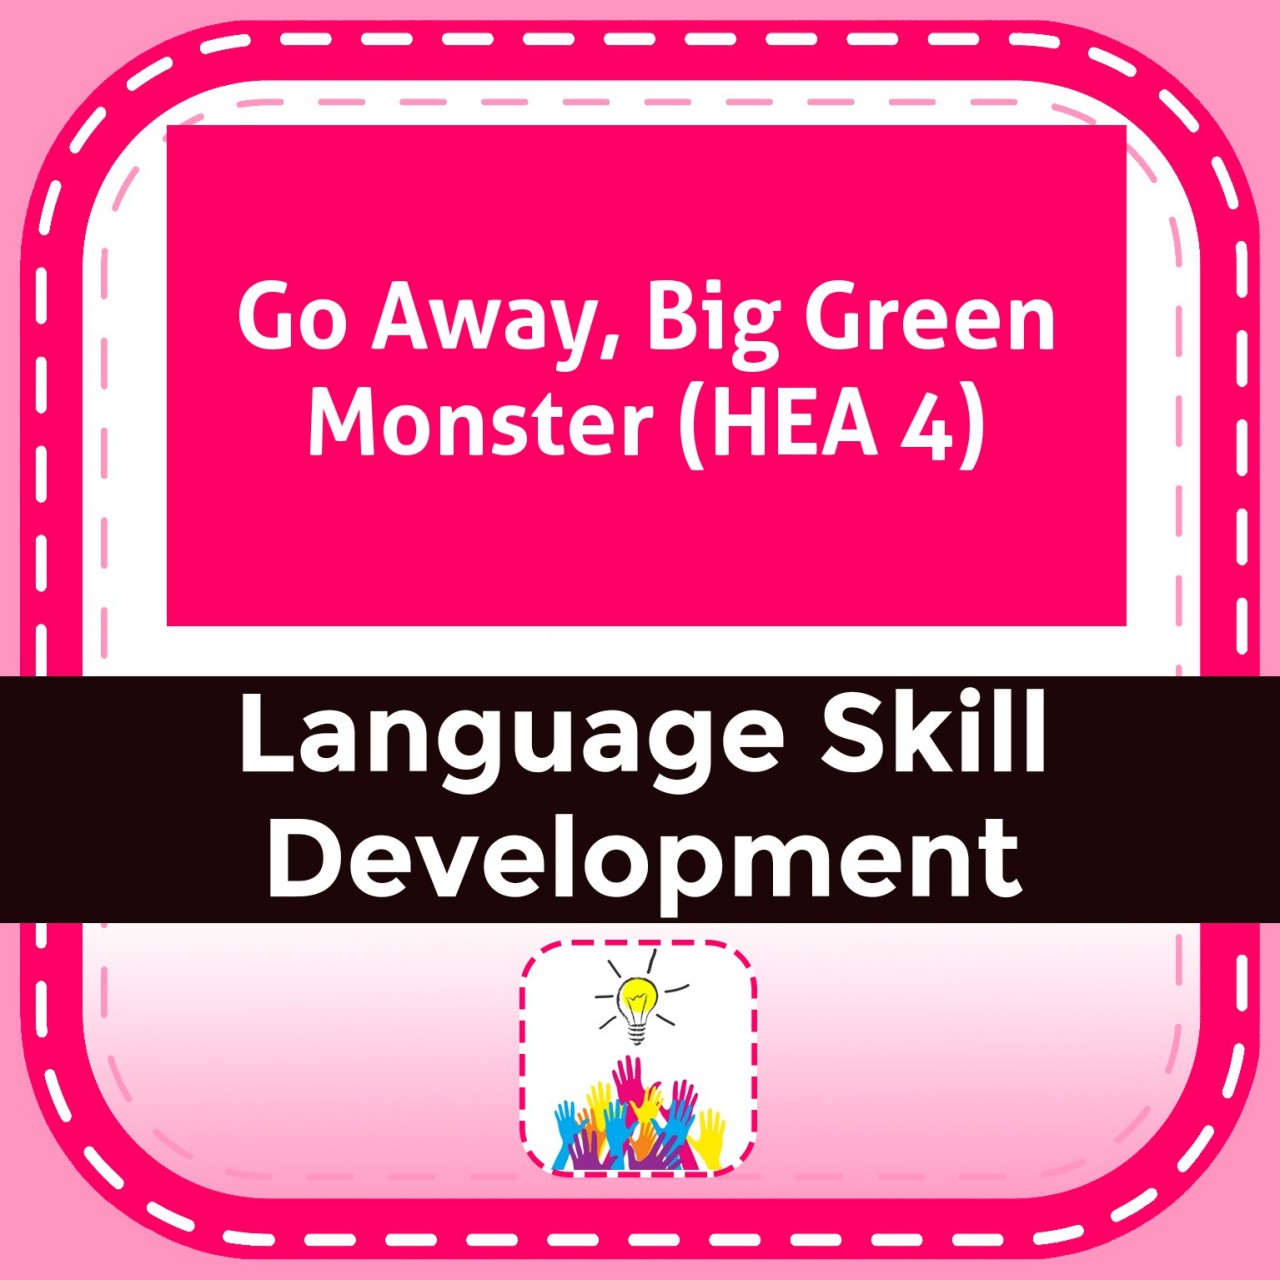 Go Away, Big Green Monster (HEA 4)